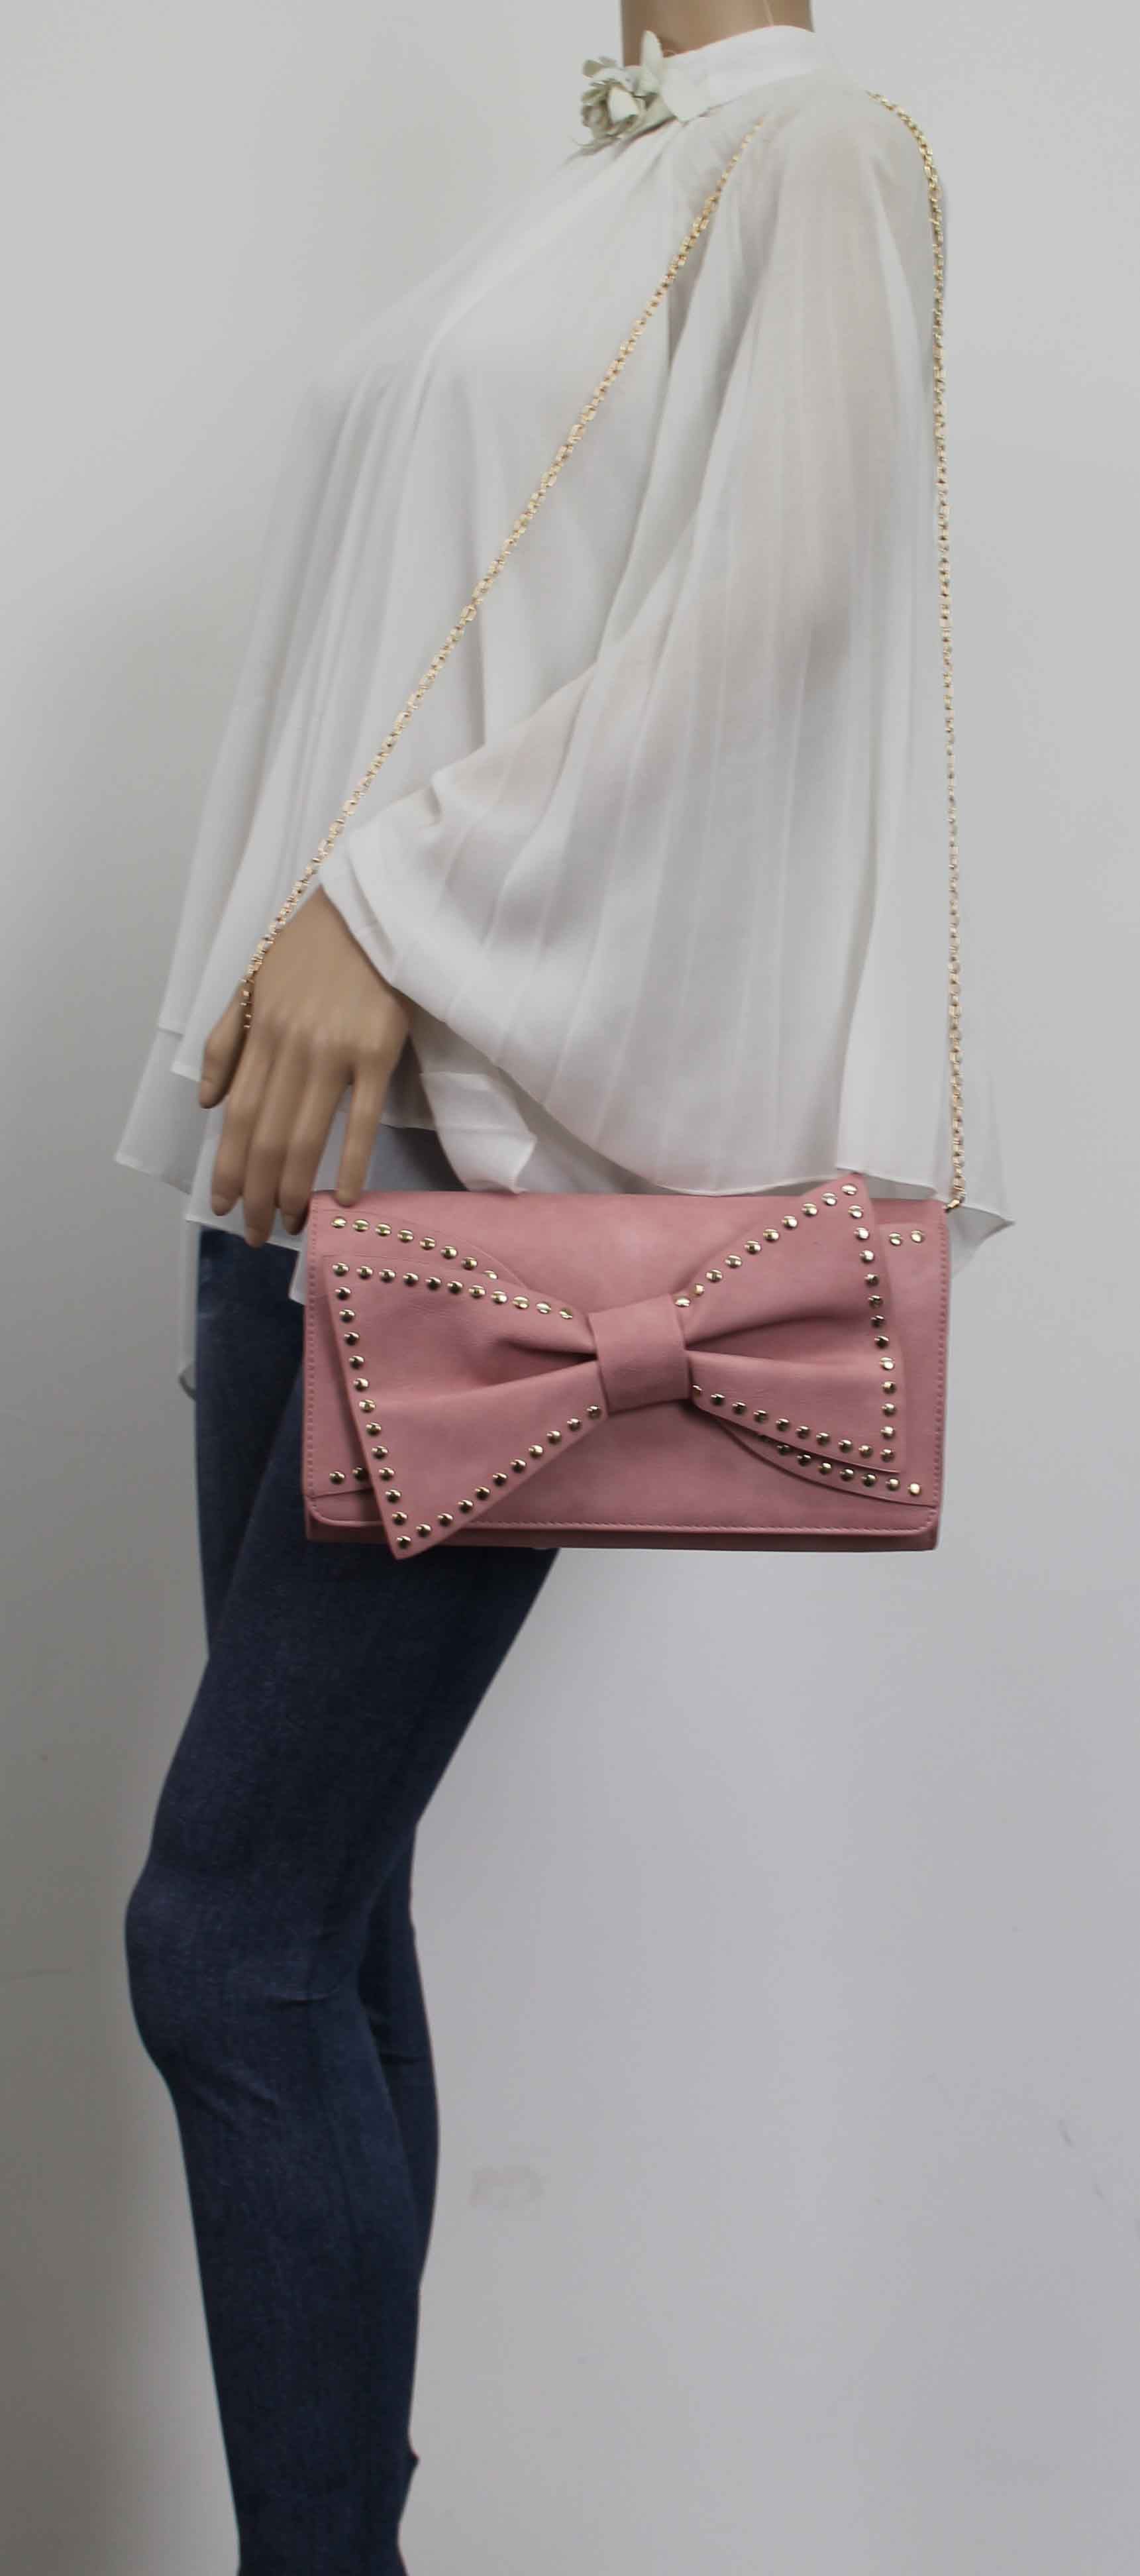 SWANKYSWANS Kelly Bow Clutch Bag Flesh Pink Cute Cheap Clutch Bag For Weddings School and Work